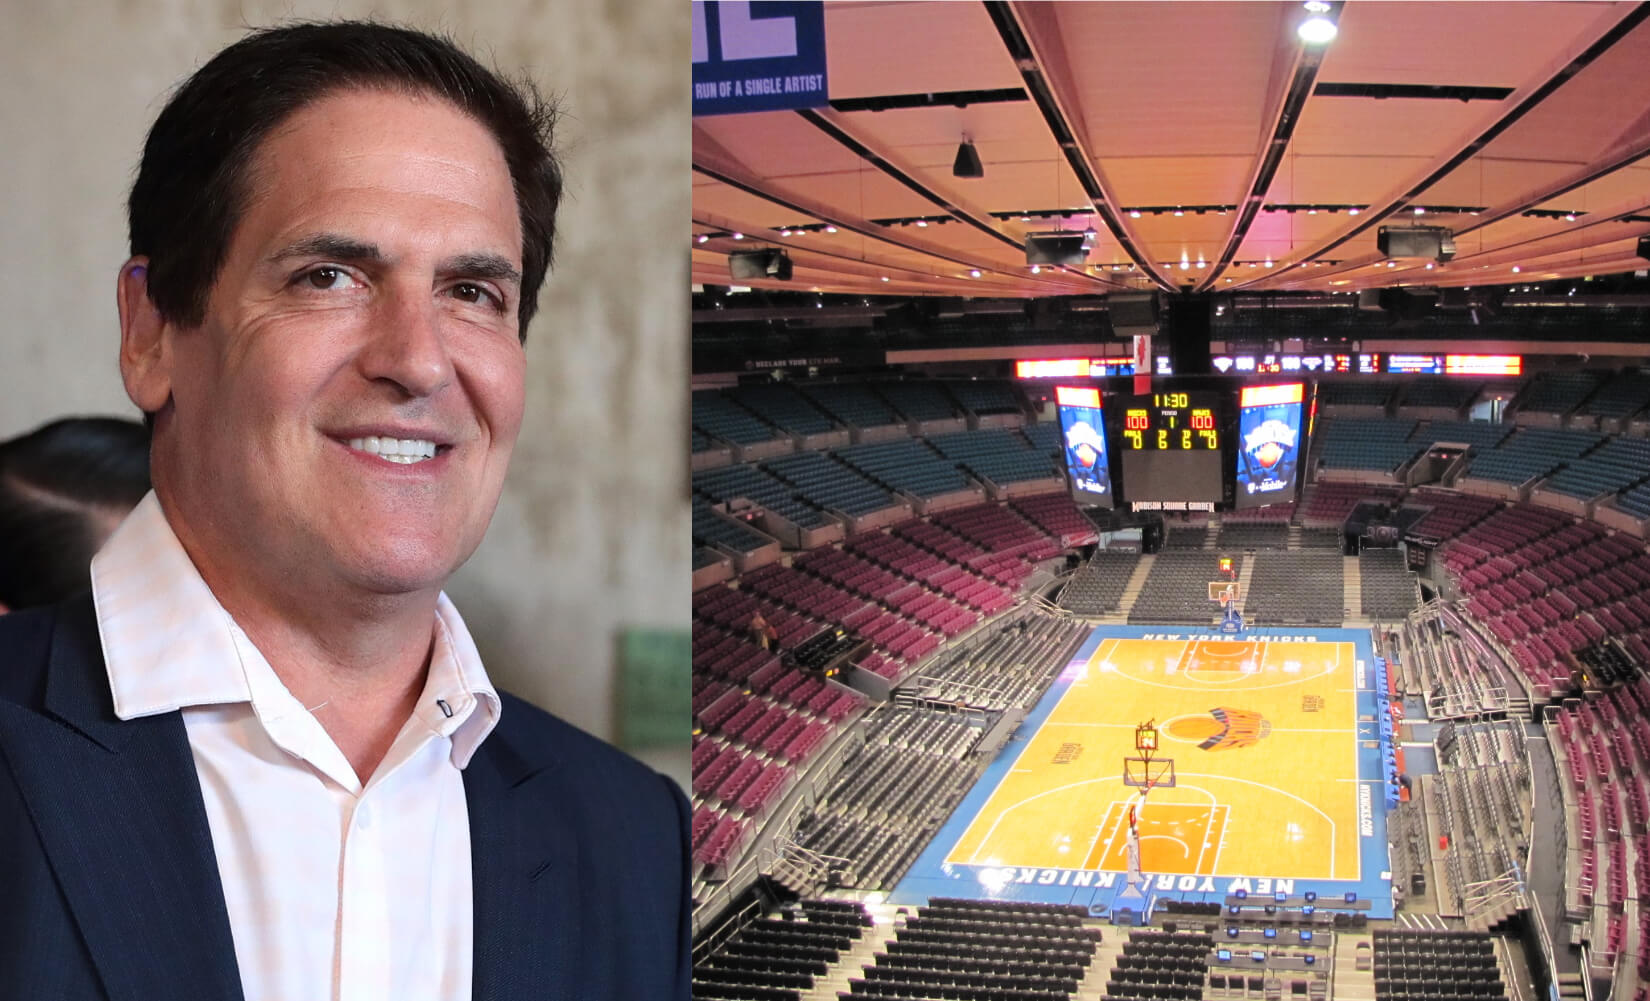 Can the Dallas Mavericks profit from Knicks tampering?